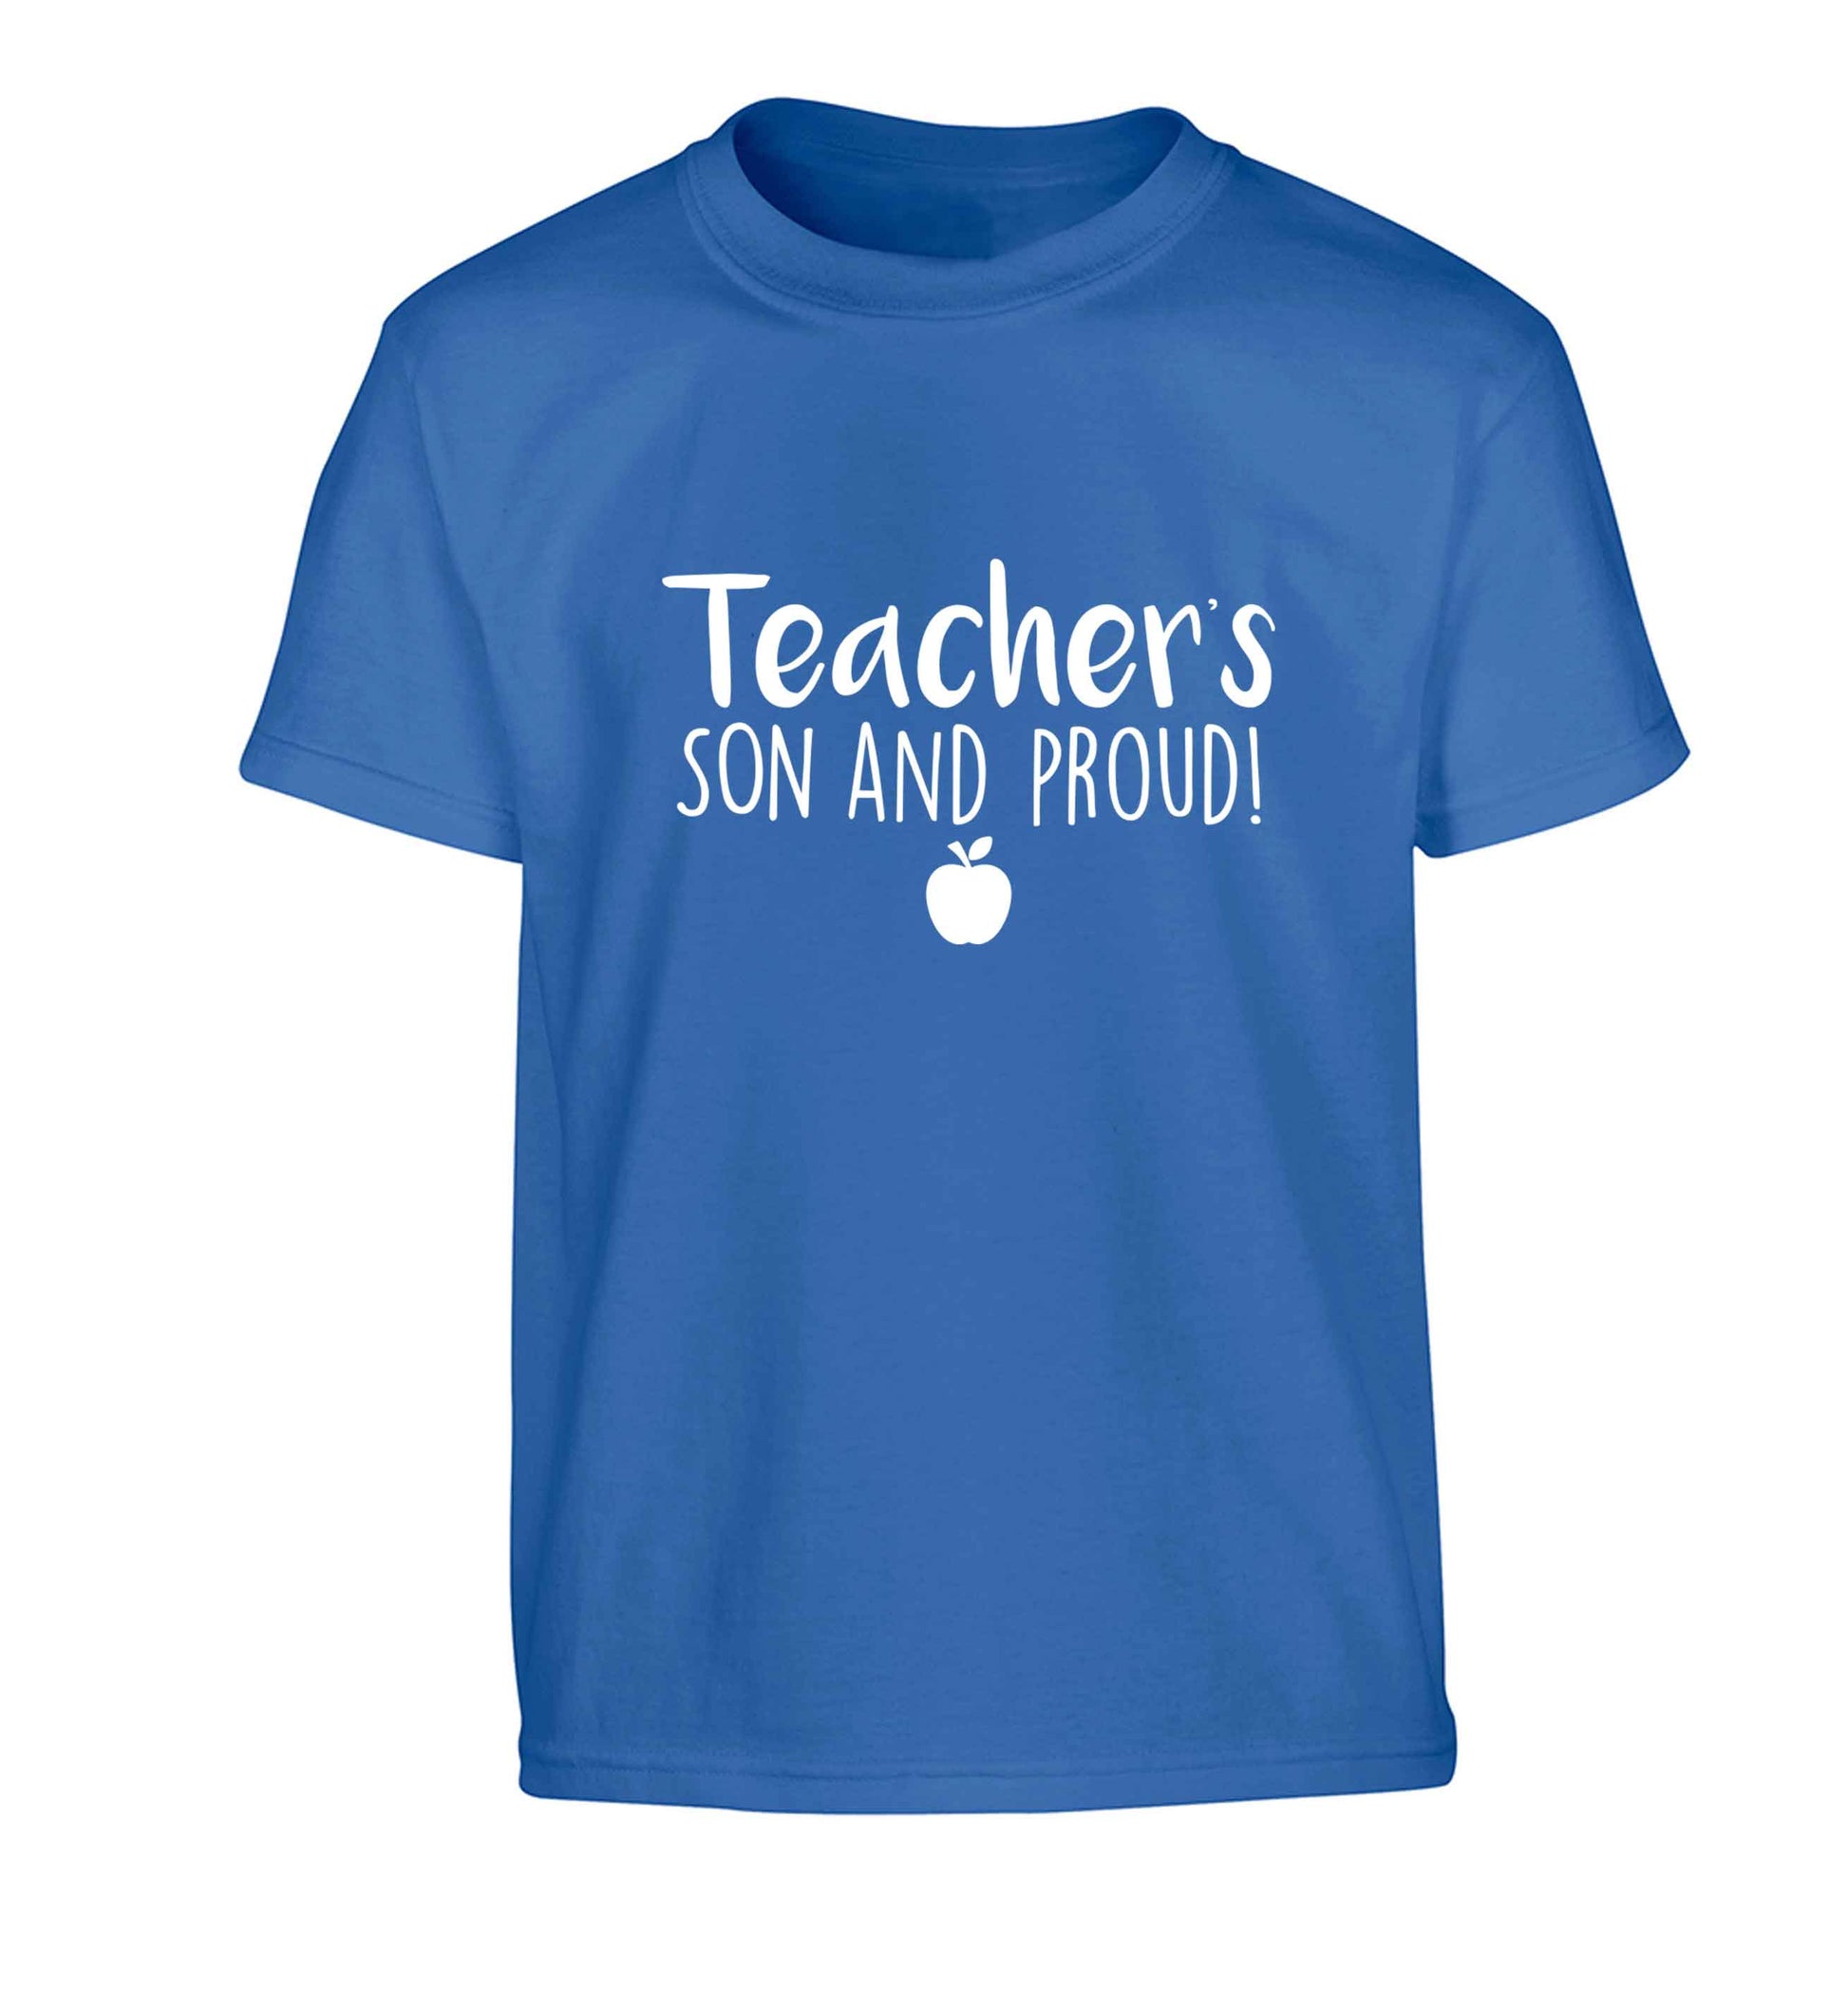 Teachers son and proud Children's blue Tshirt 12-13 Years